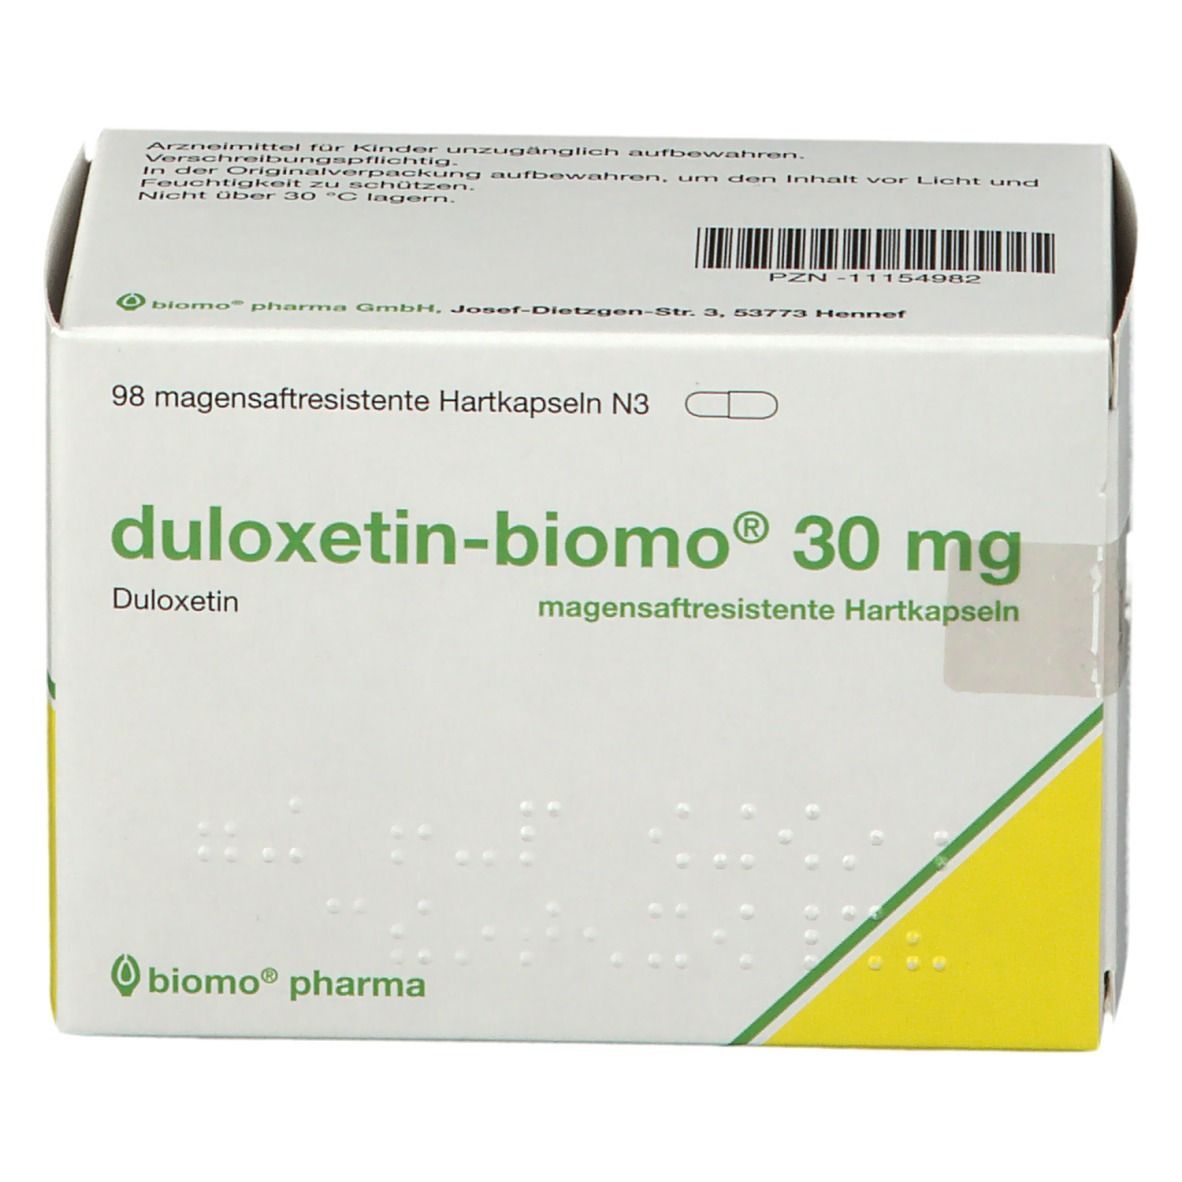 duloxetin-biomo® 30 mg